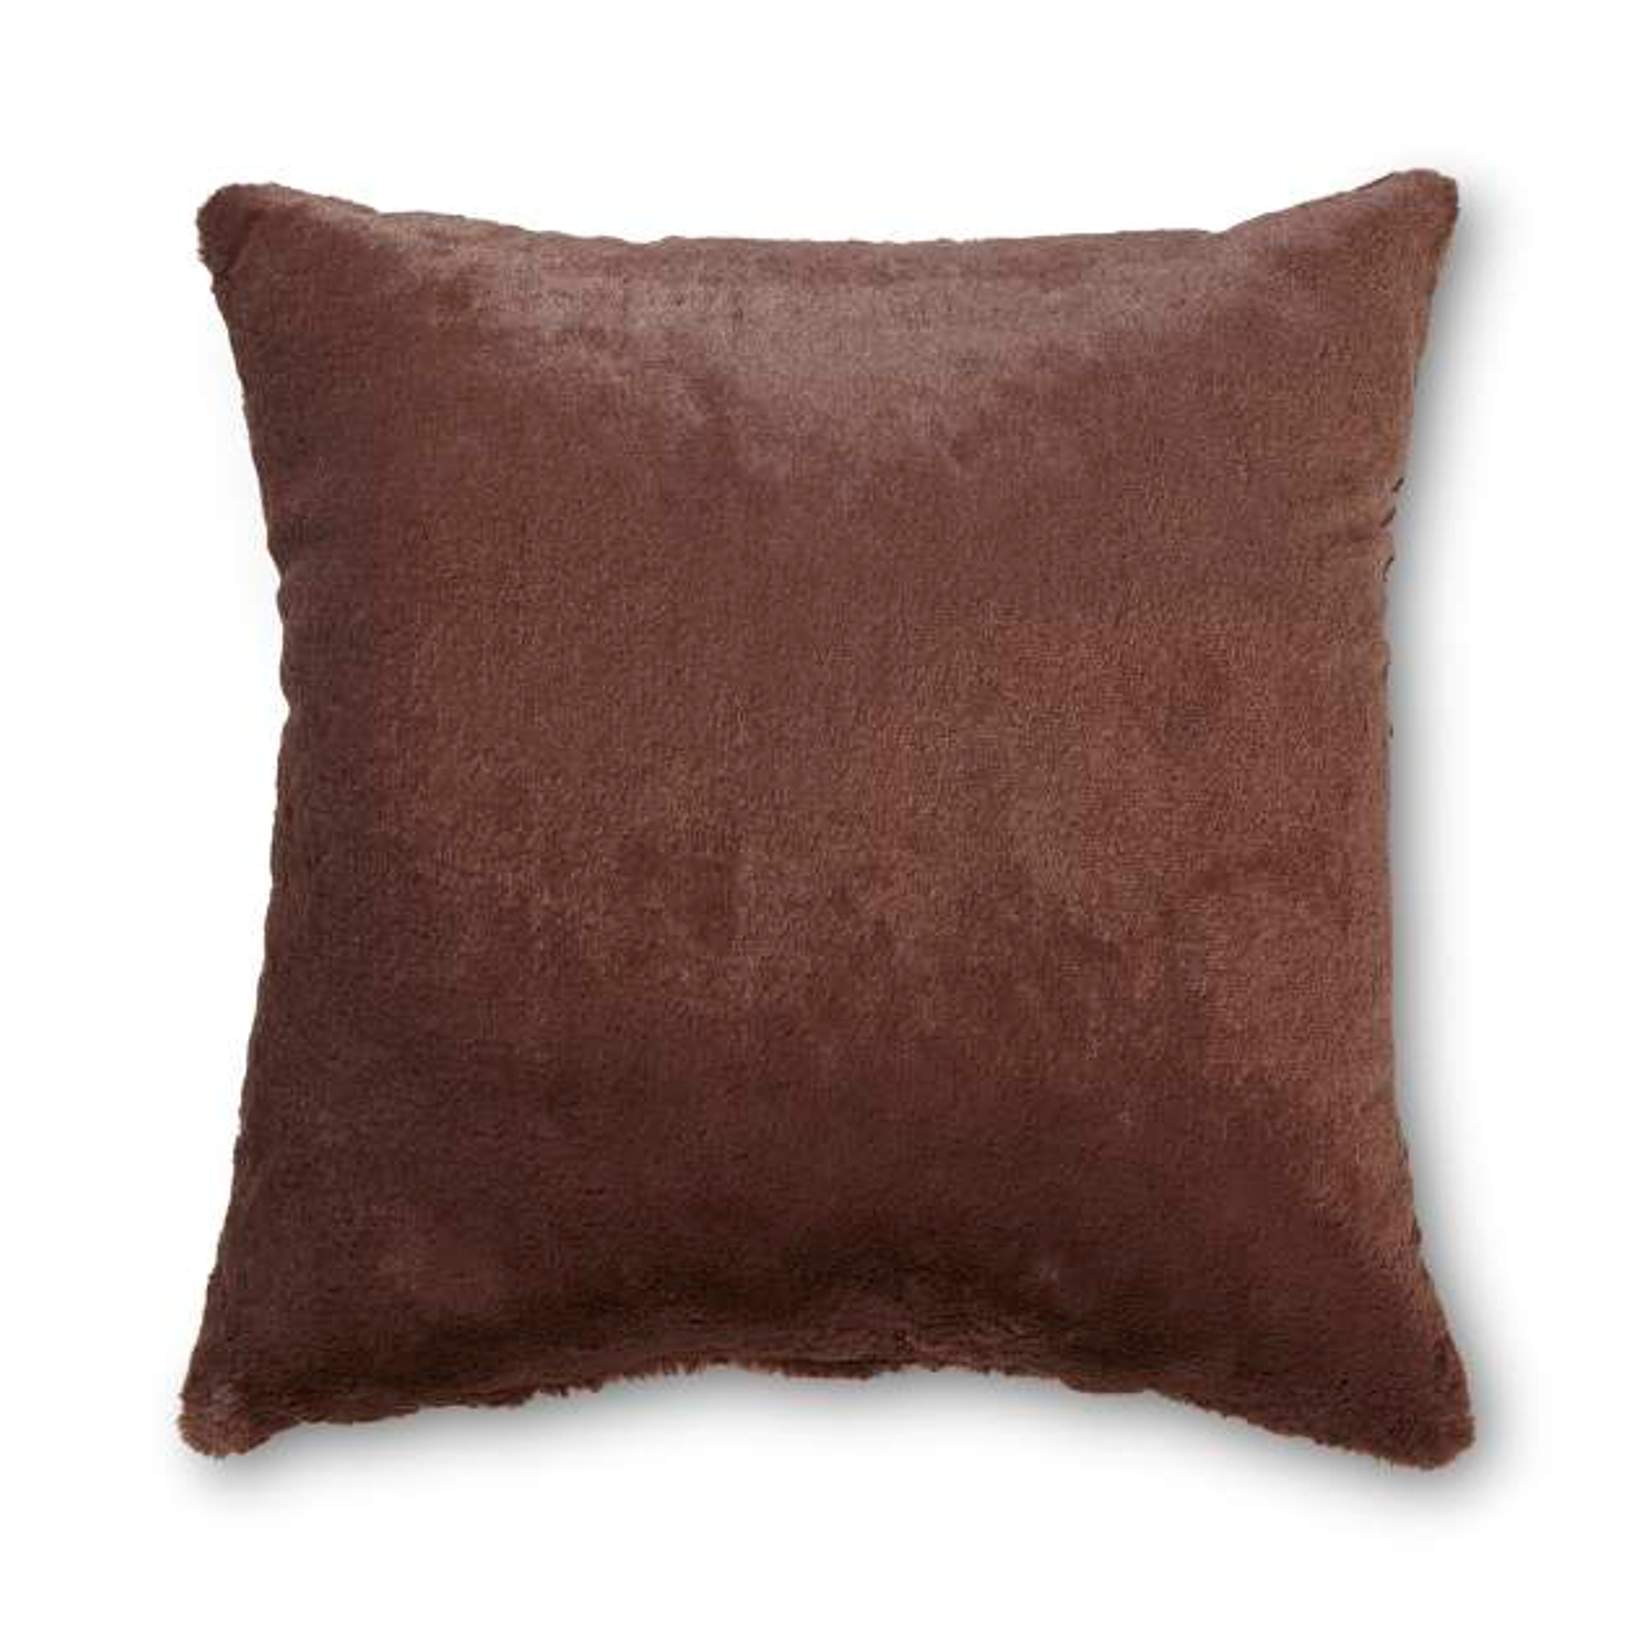 Splendor Faux Fur Pillow - Chocolate